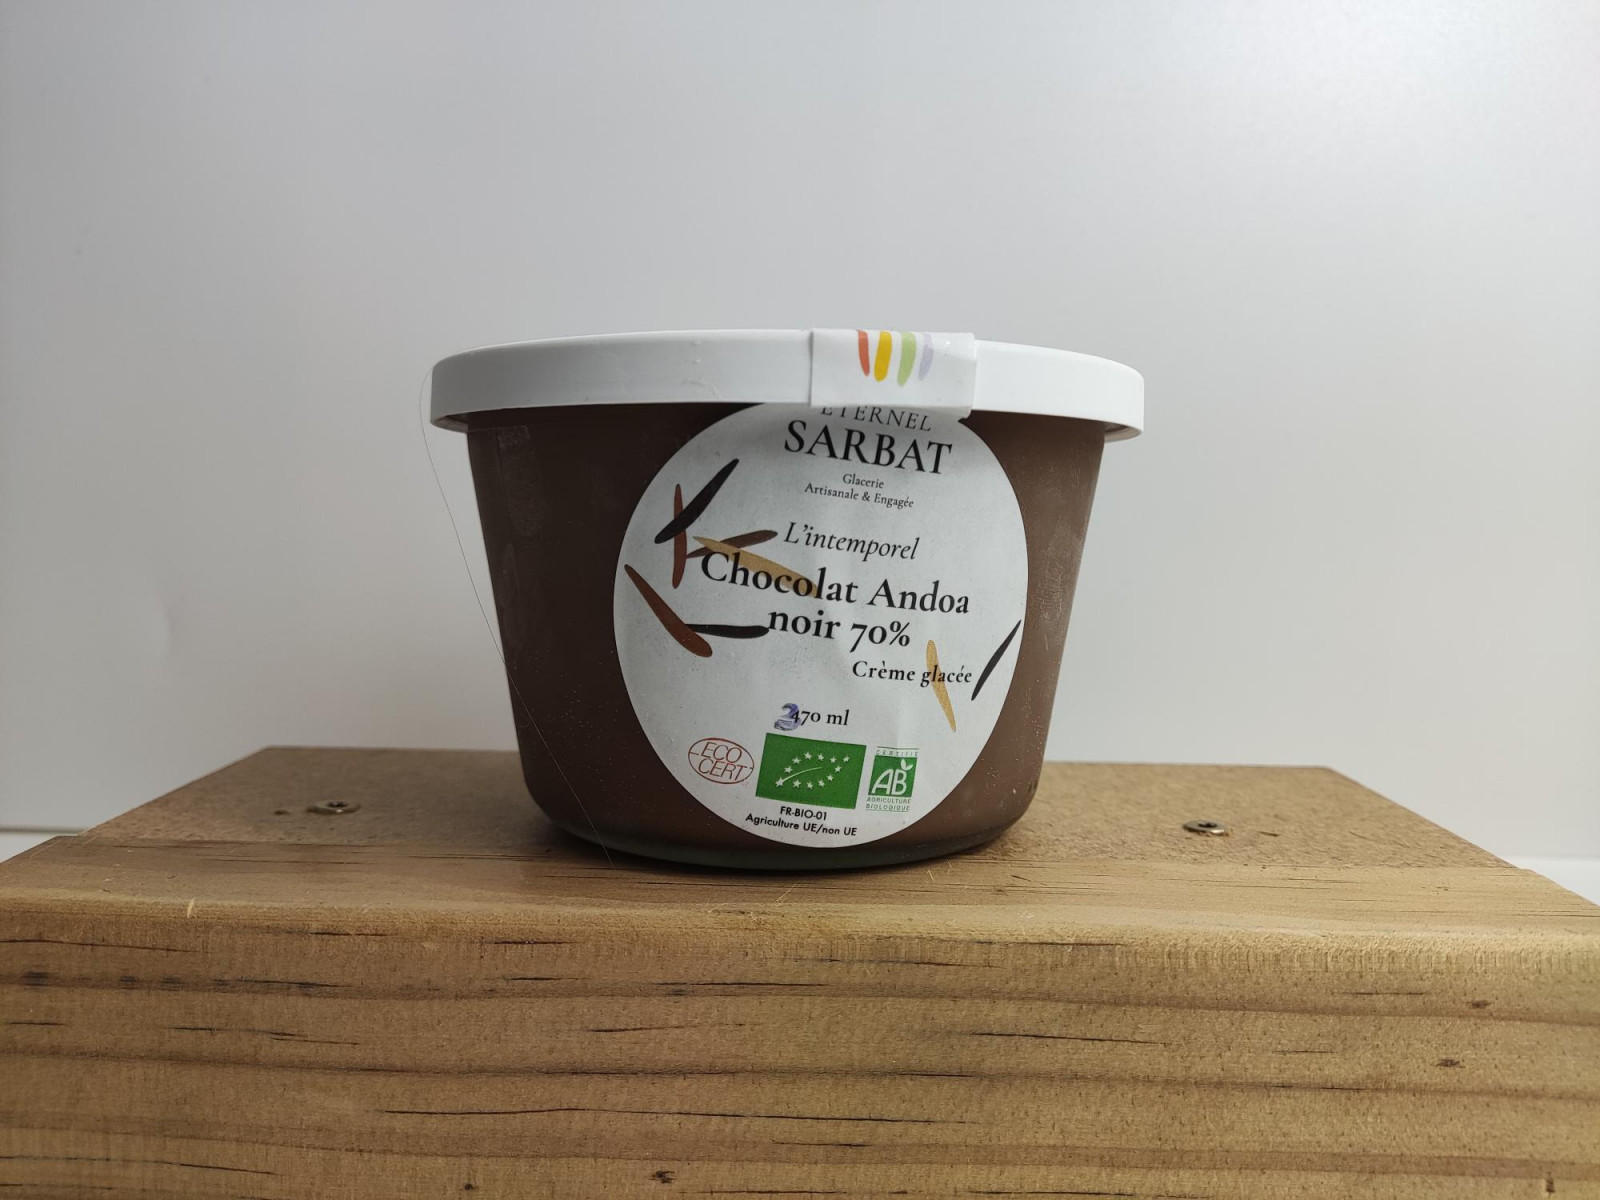 Crème glacée chocolat noir Andoa 70% 370ml